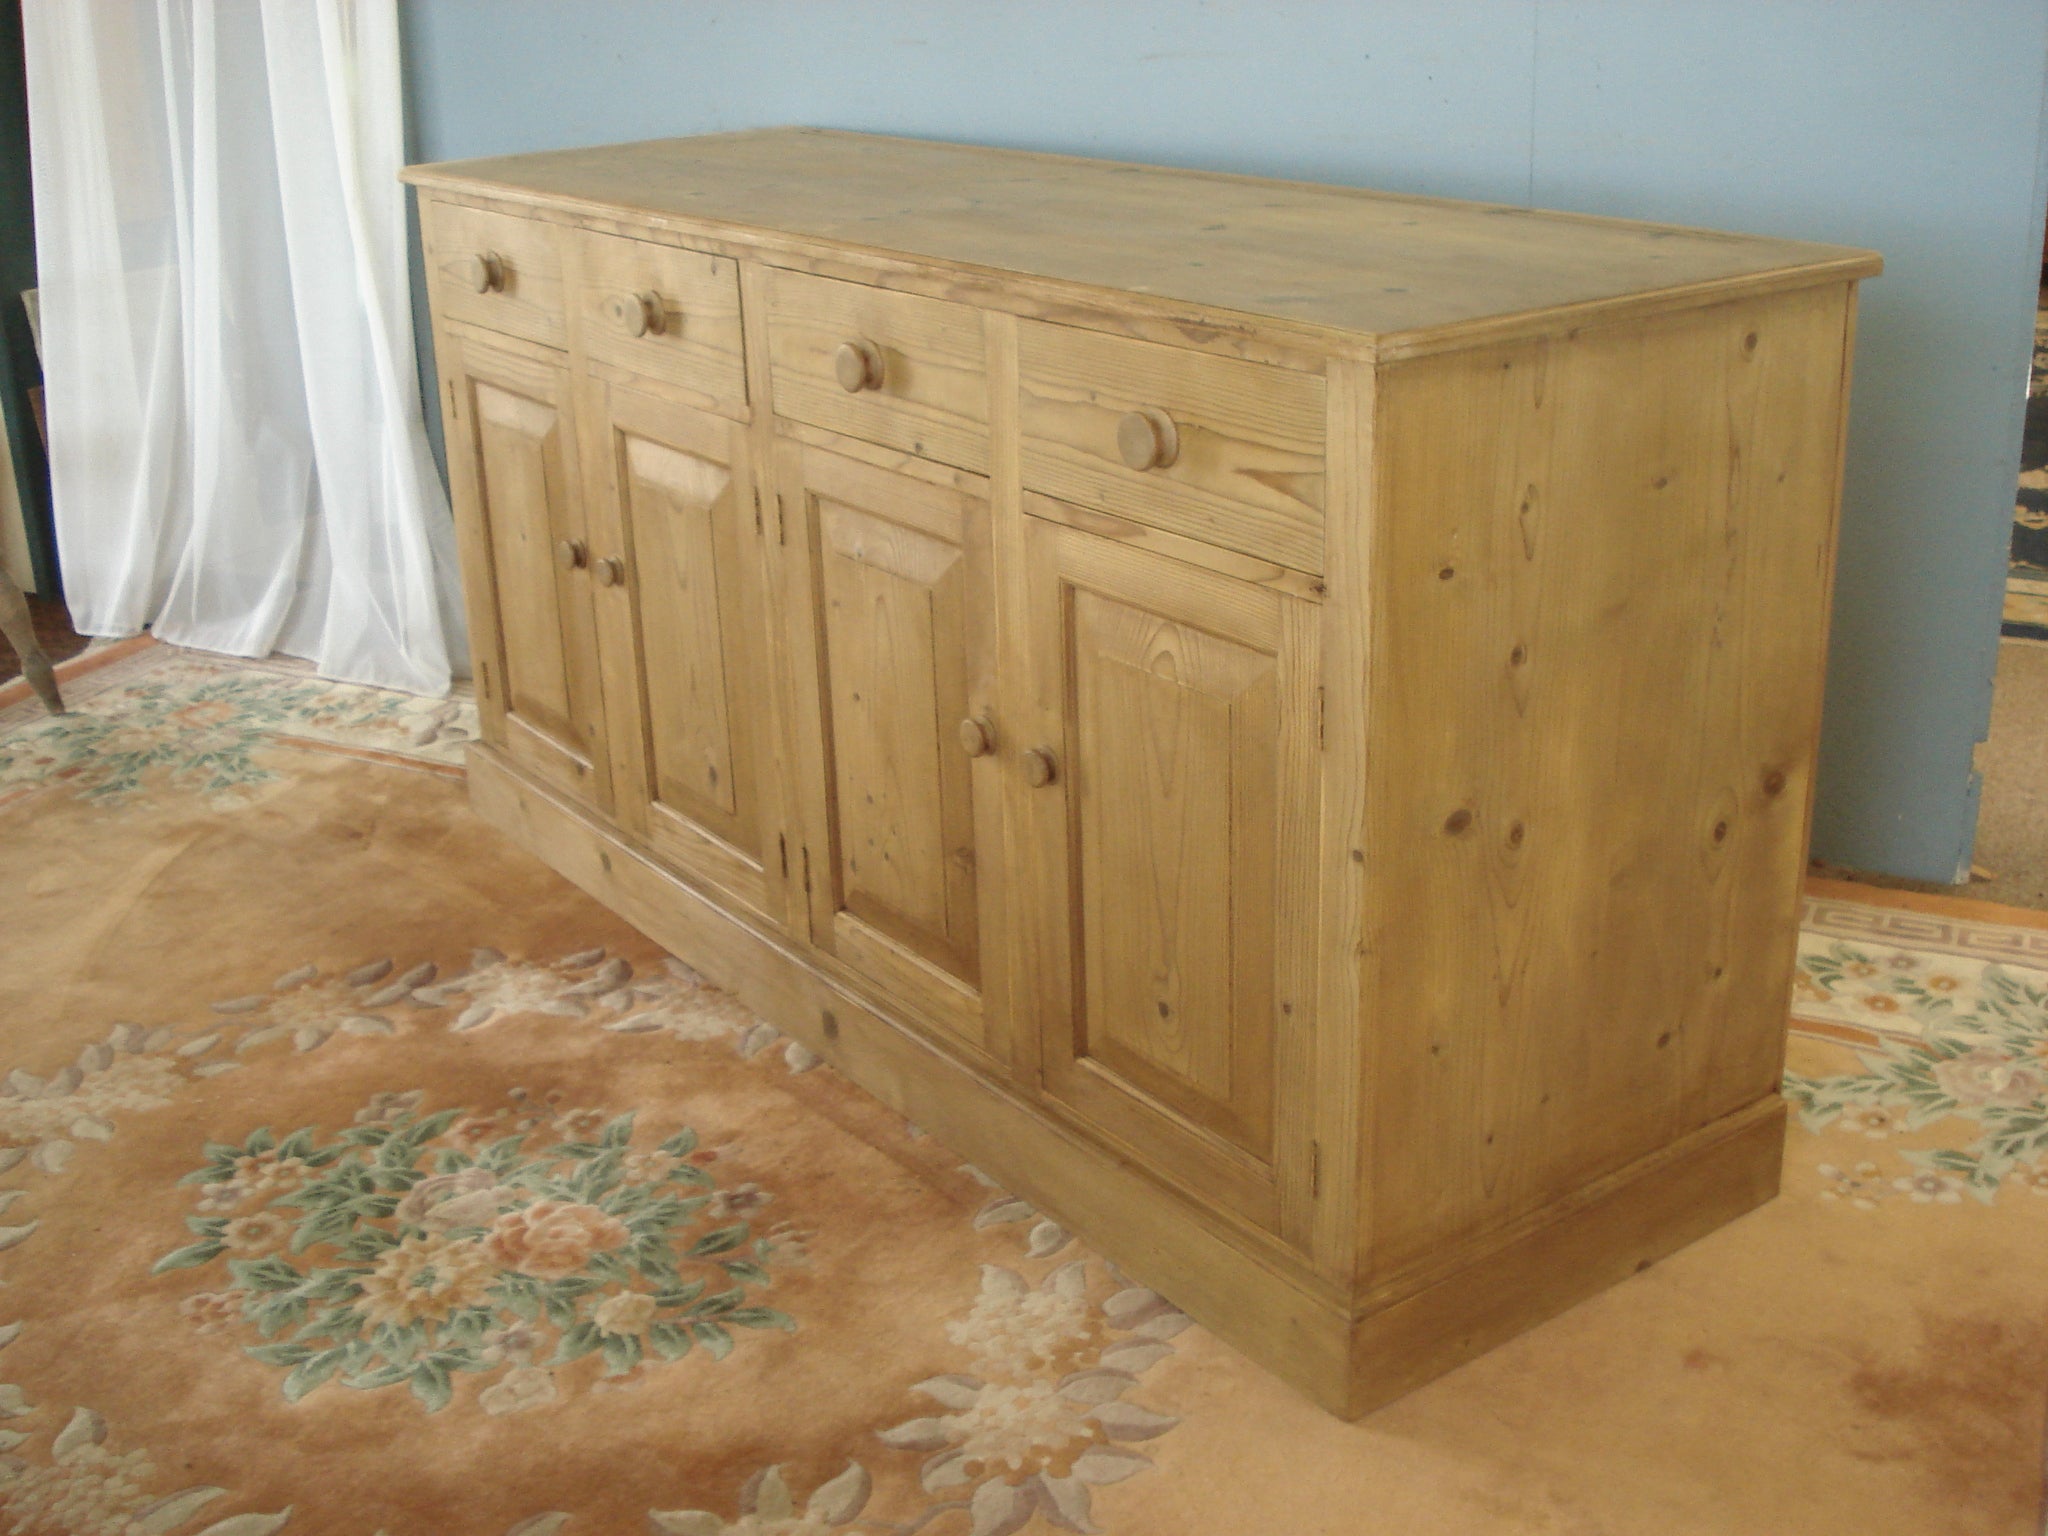 6ft. Stripped pine hand-made dresser base